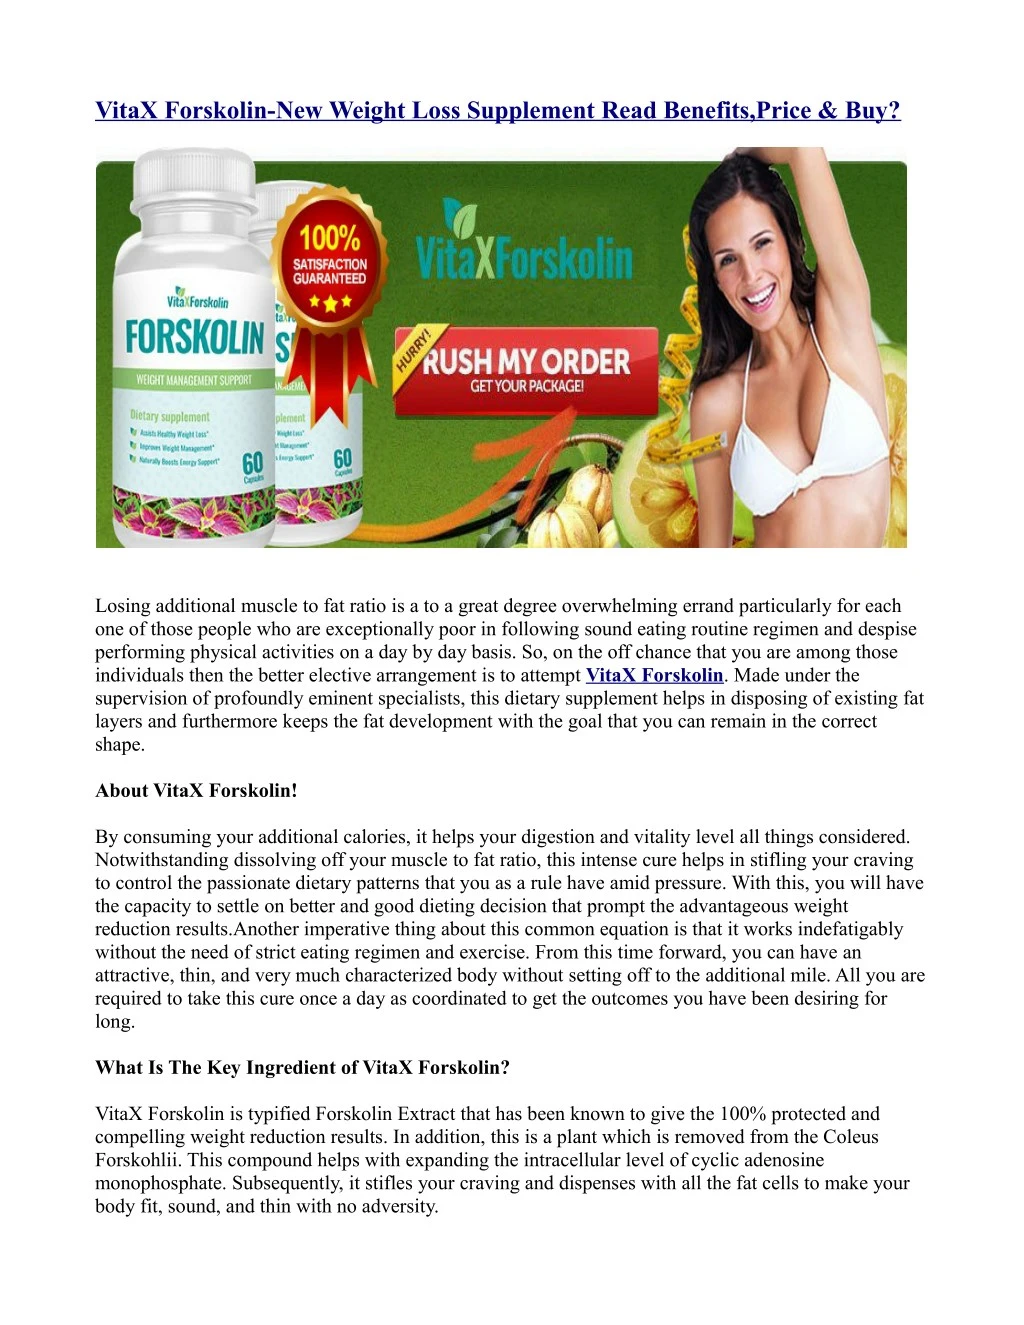 vitax forskolin new weight loss supplement read